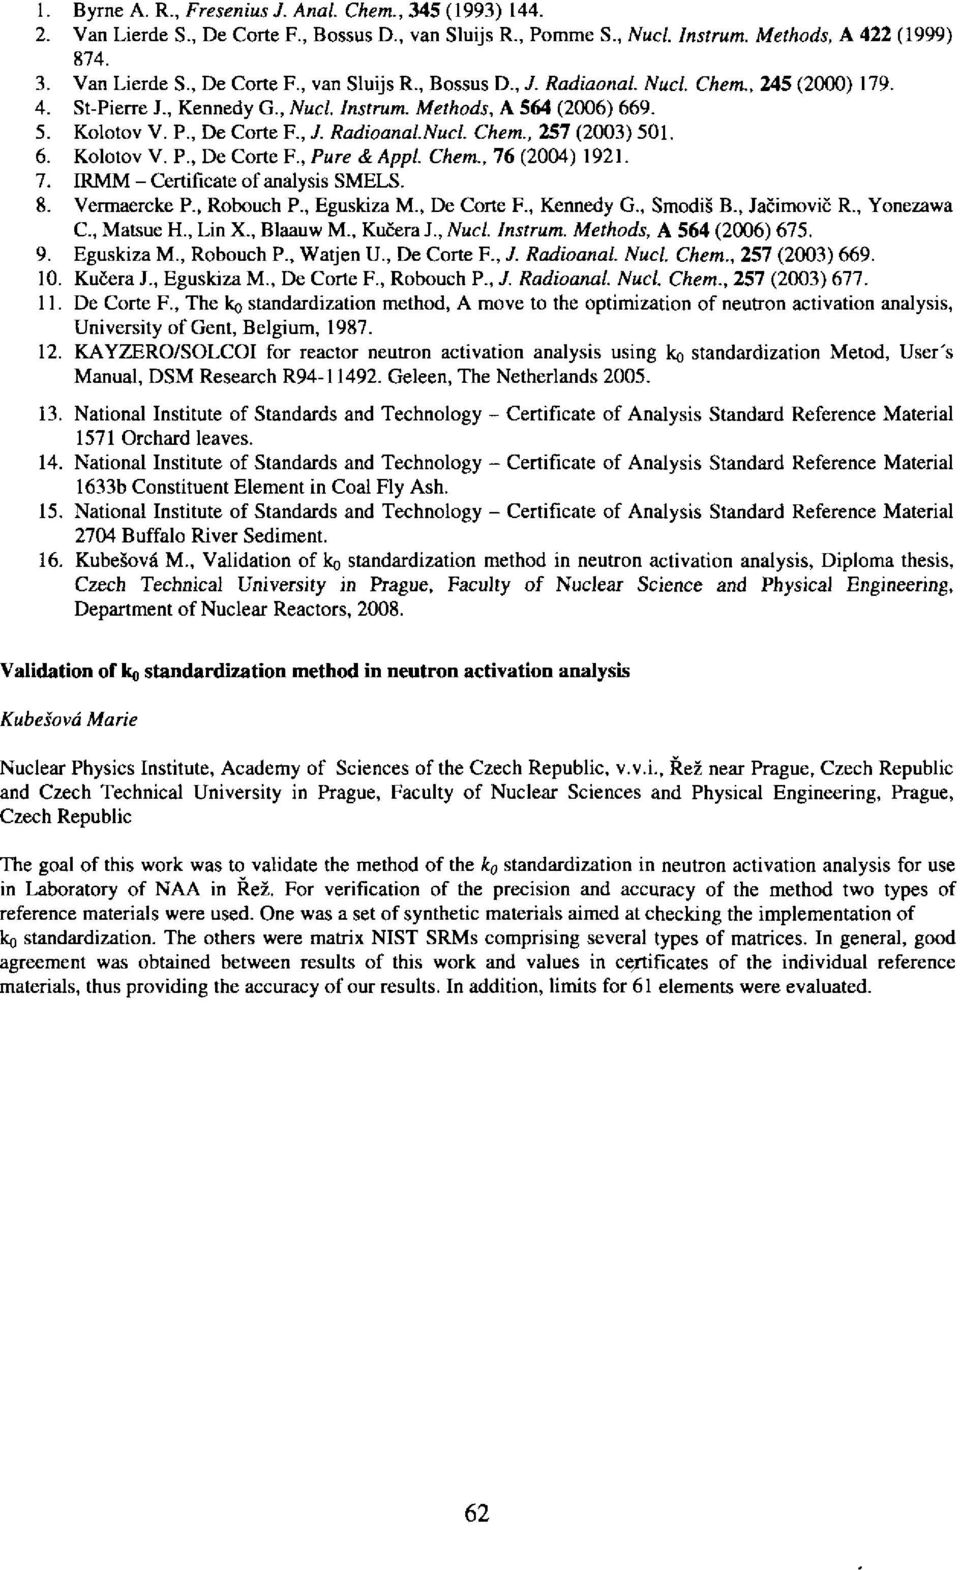 Chem., 76 (00) 9. 7. IRMM - Certificate of analyi SMELS. 8. Vermaercke P., Robouch P., Egukiza M., De Corte F., Kennedy G., Smodiš B., Jačimovič R., Yonezawa C, Matue H., Lin X., Blaauw M., Kučera J.